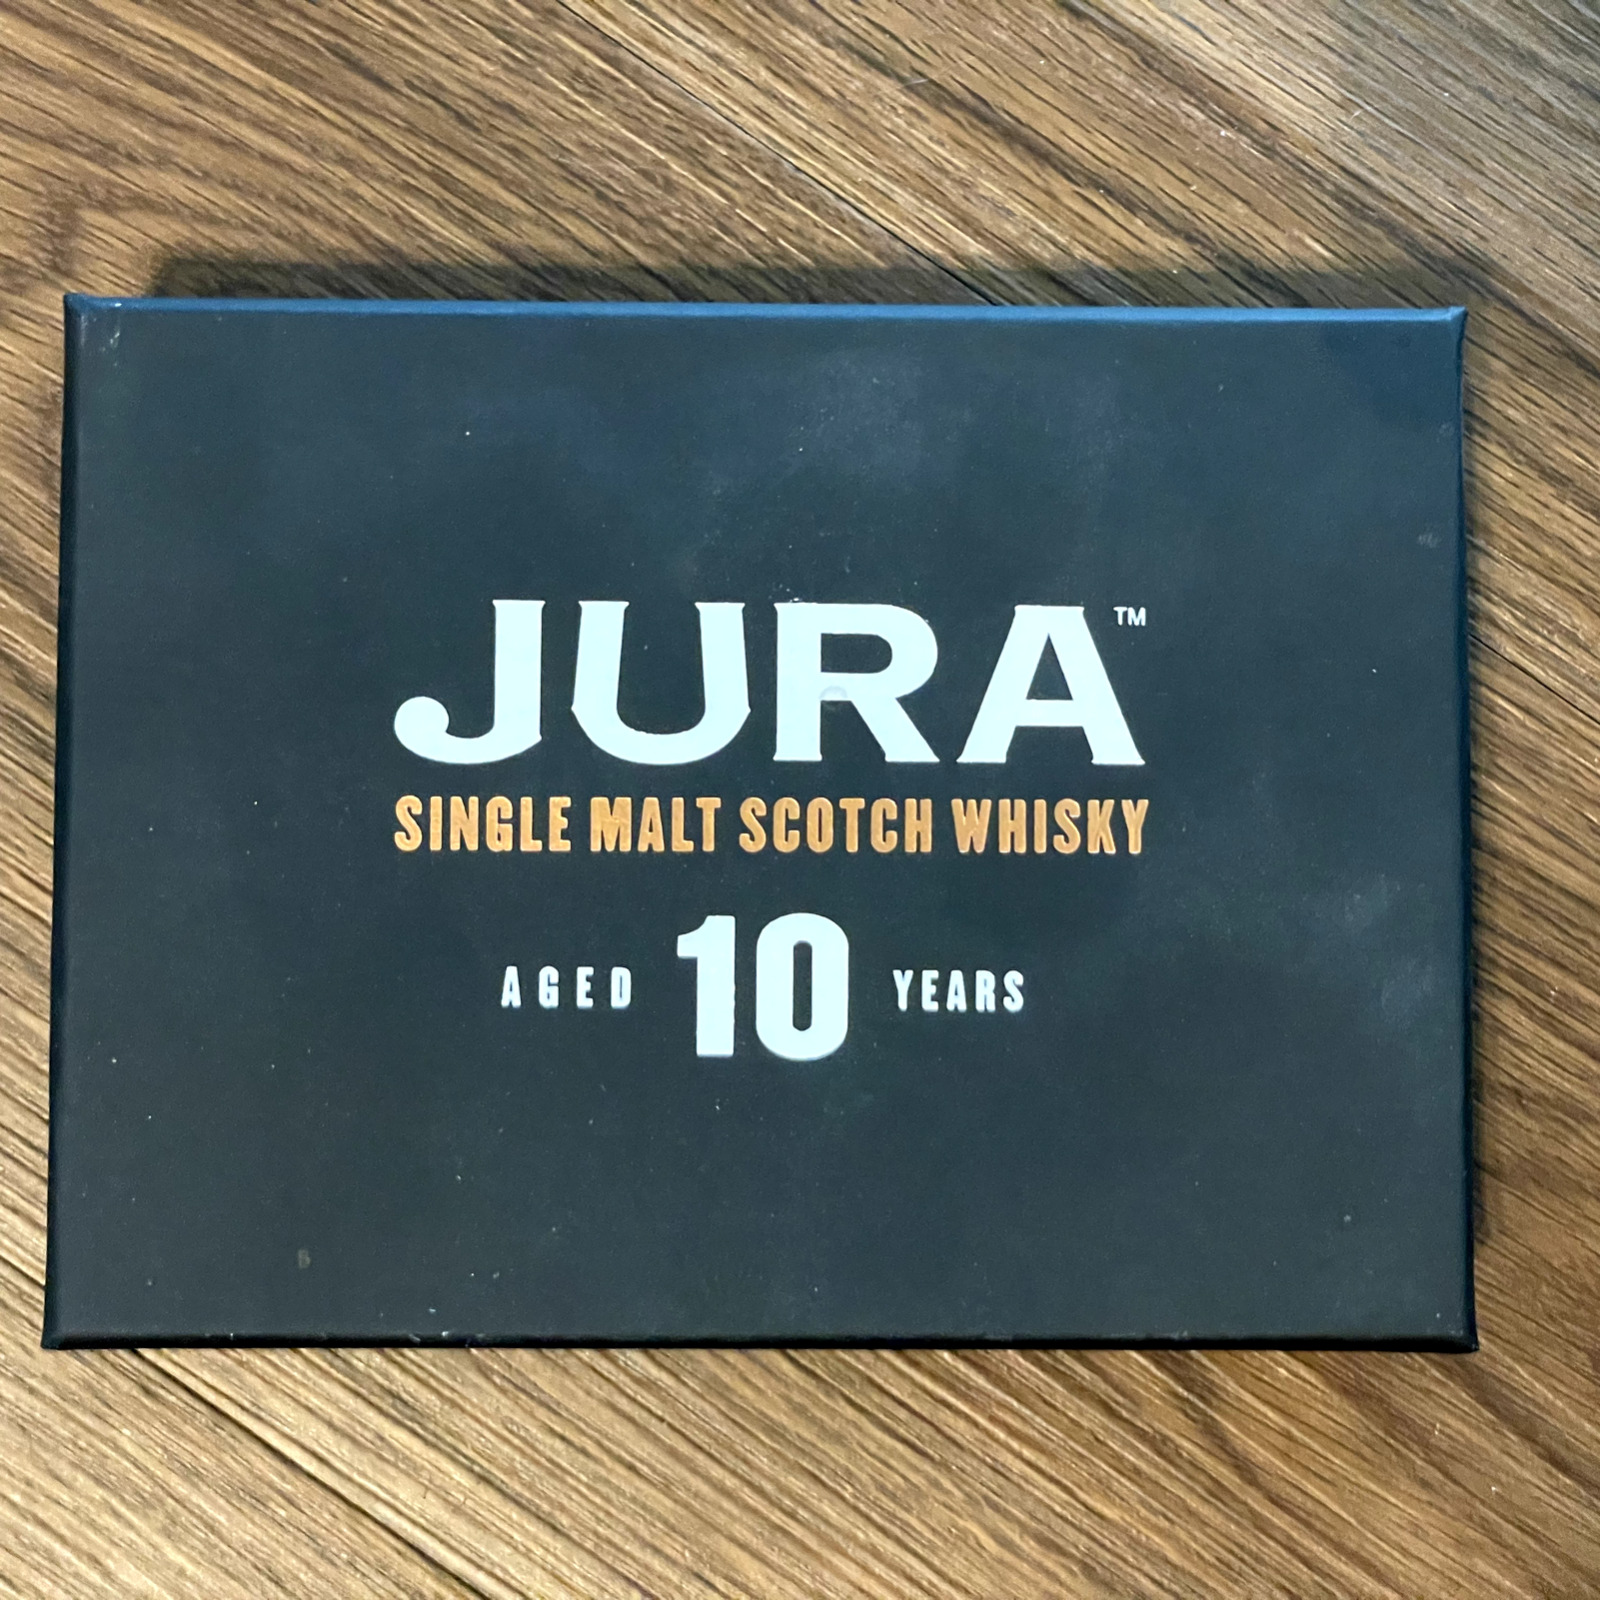 Jura Aged 10 Year Single Malt Scotch Whisky Bandana Scarf Handkerchief